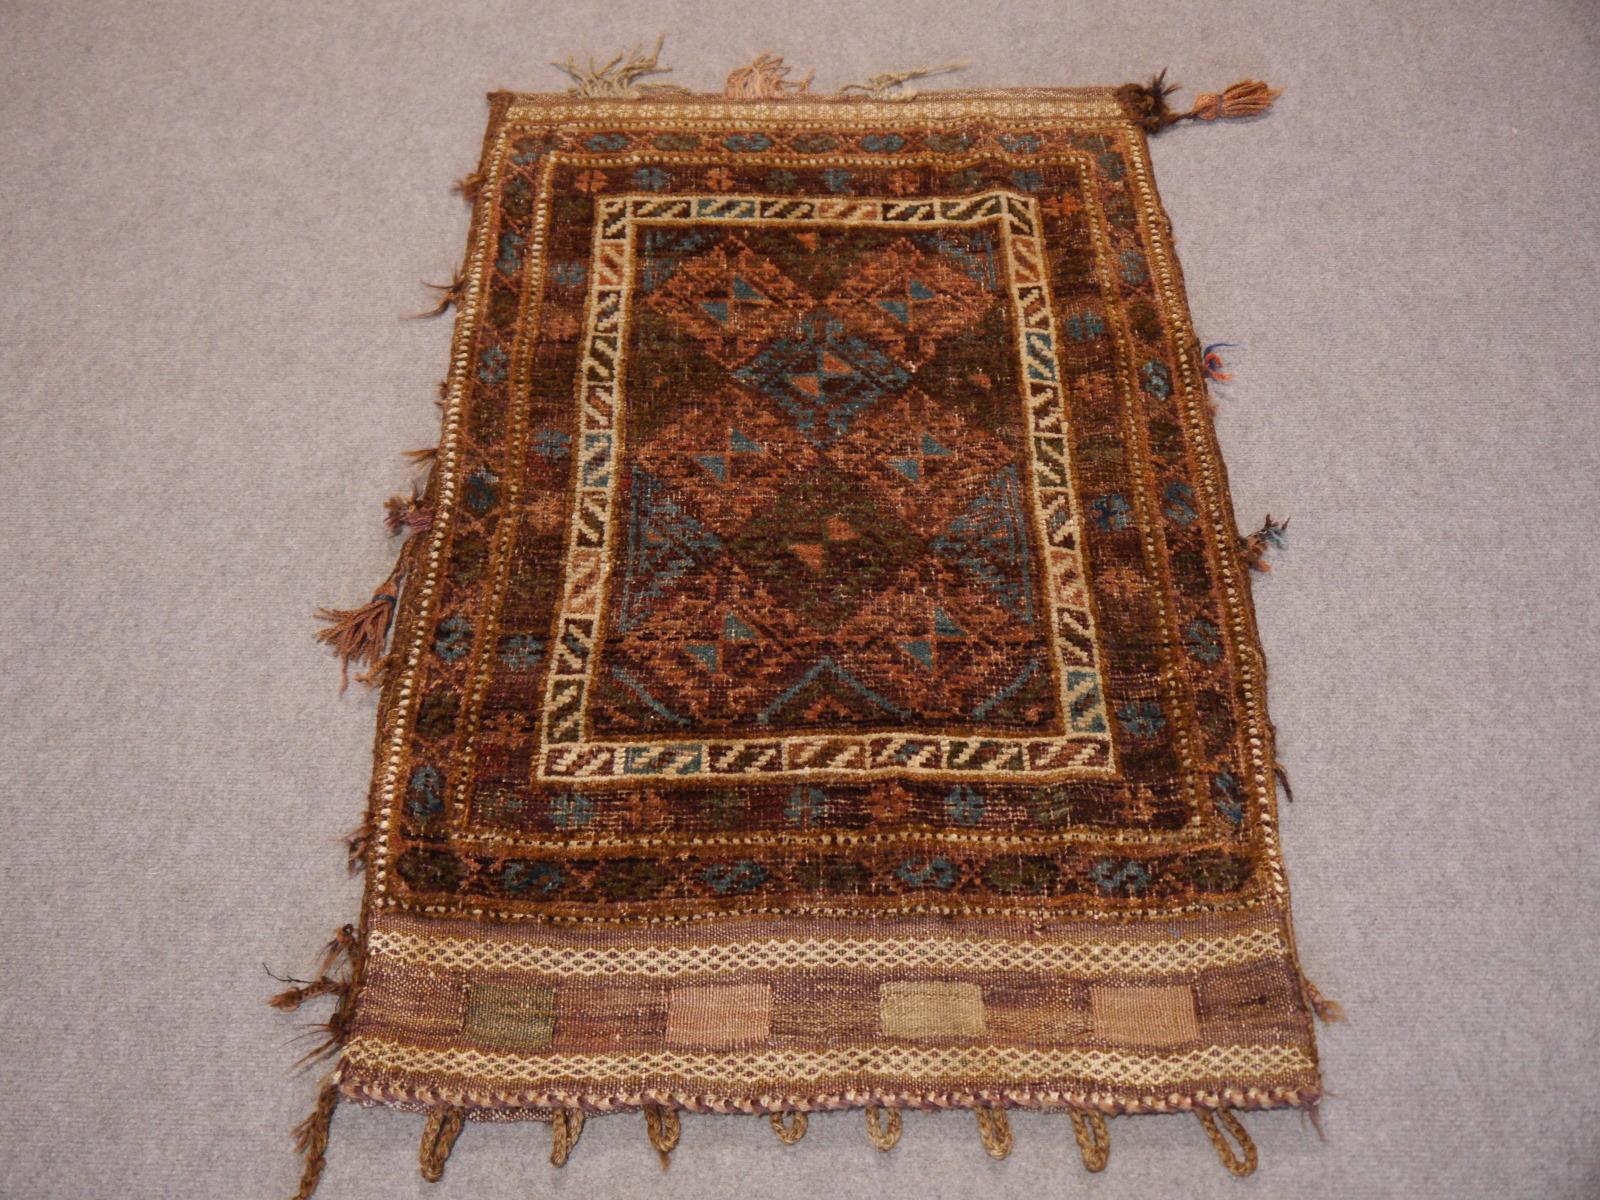 20th Century Antique Afghan Cornsack or Tribal Bag